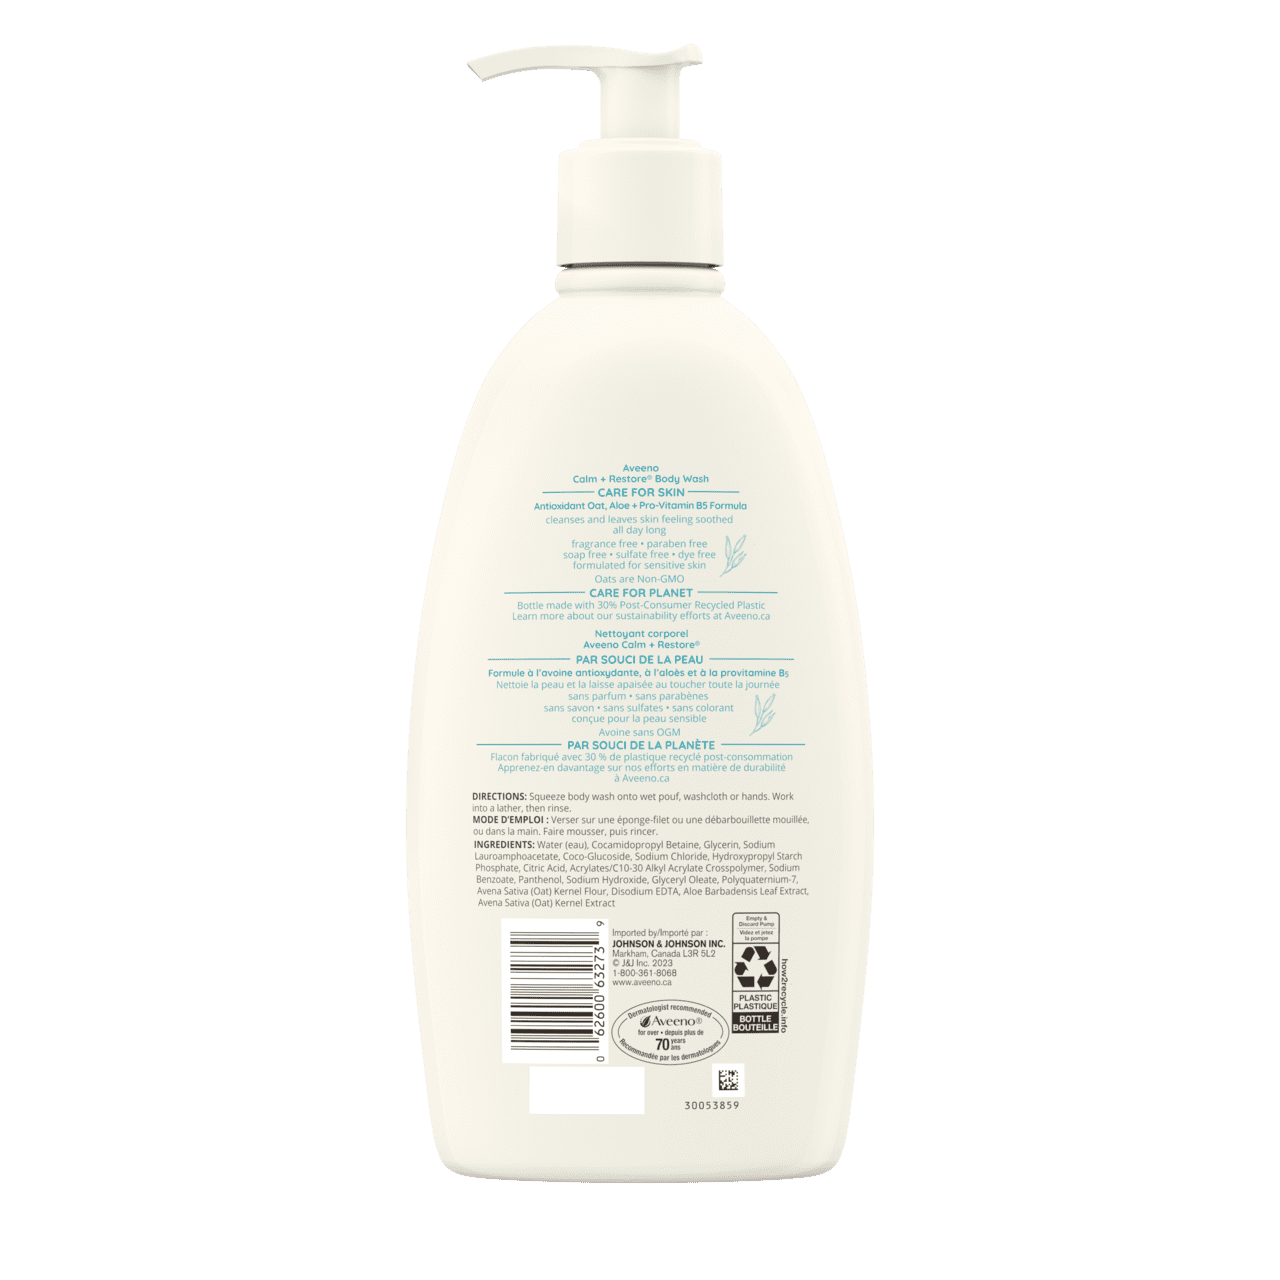 AVEENO® Calm + Restore Body Wash, pump bottle, back label.